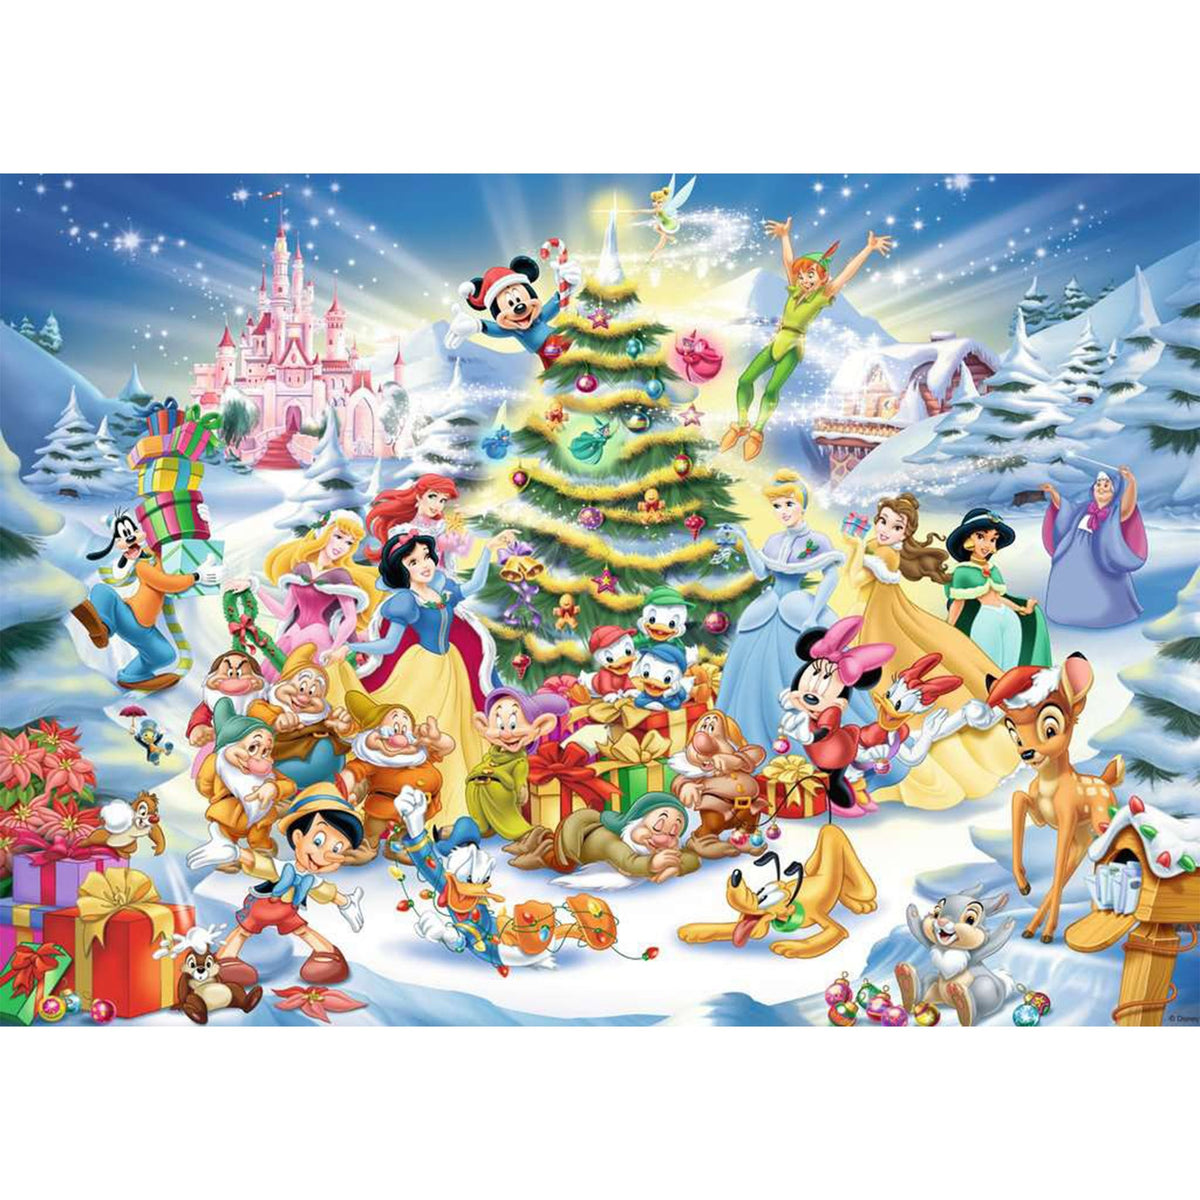 Joyeux Noël  Disney christmas, Christmas jigsaws, Christmas jigsaw puzzles